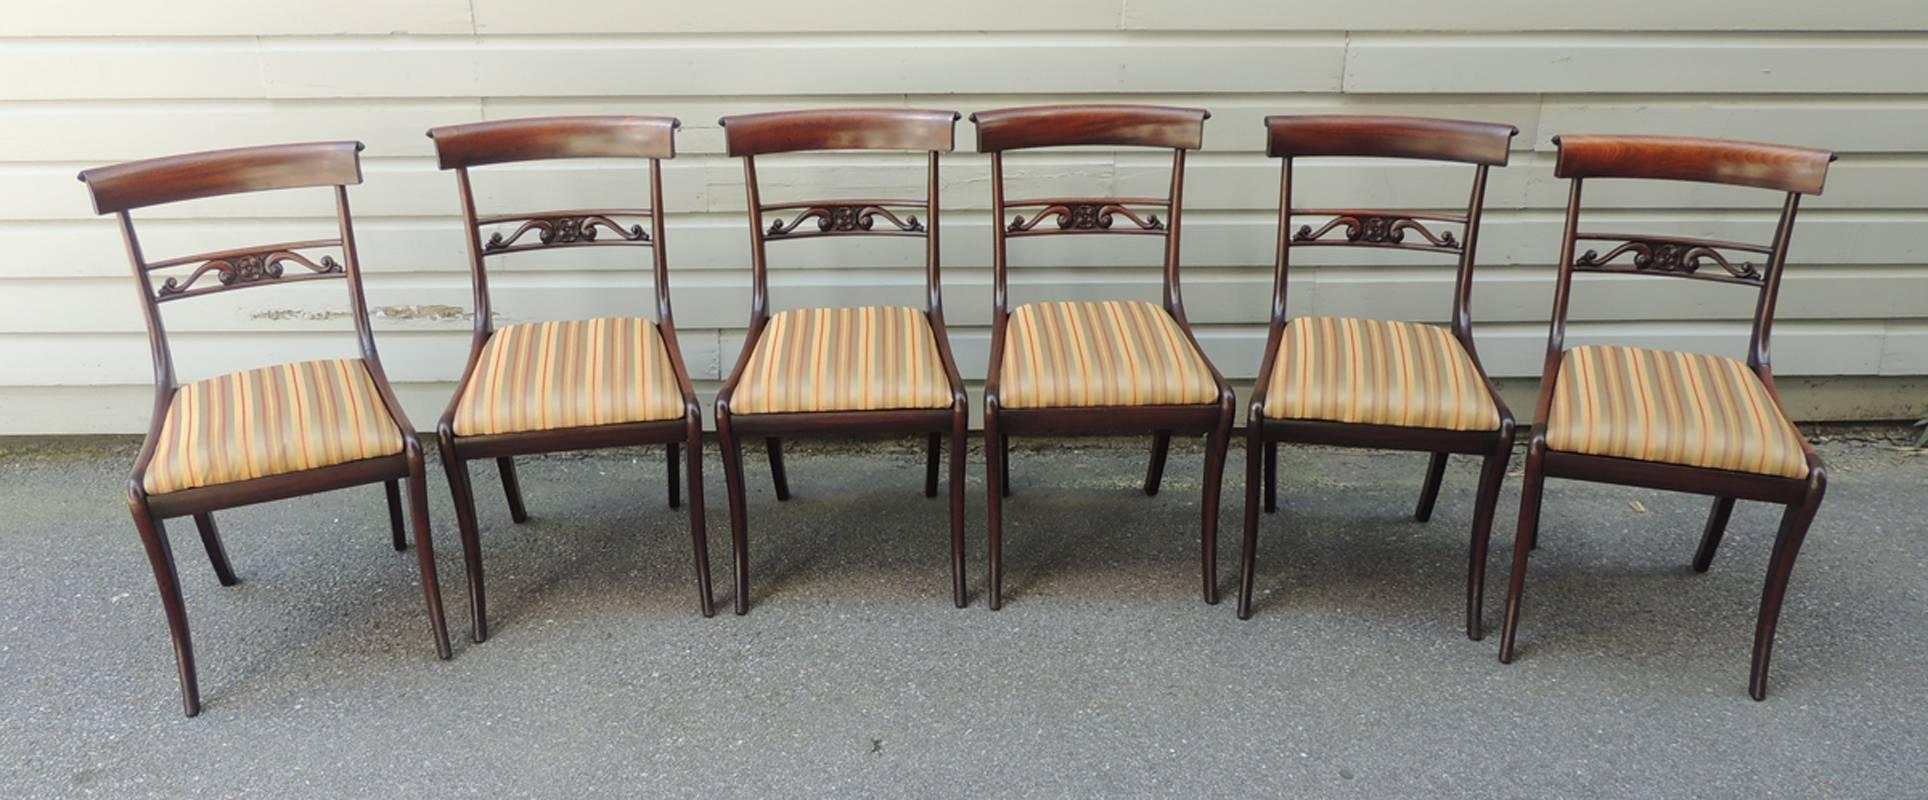 Set of Six Early 19th C English Regency Mahogany Dining Chairs 3